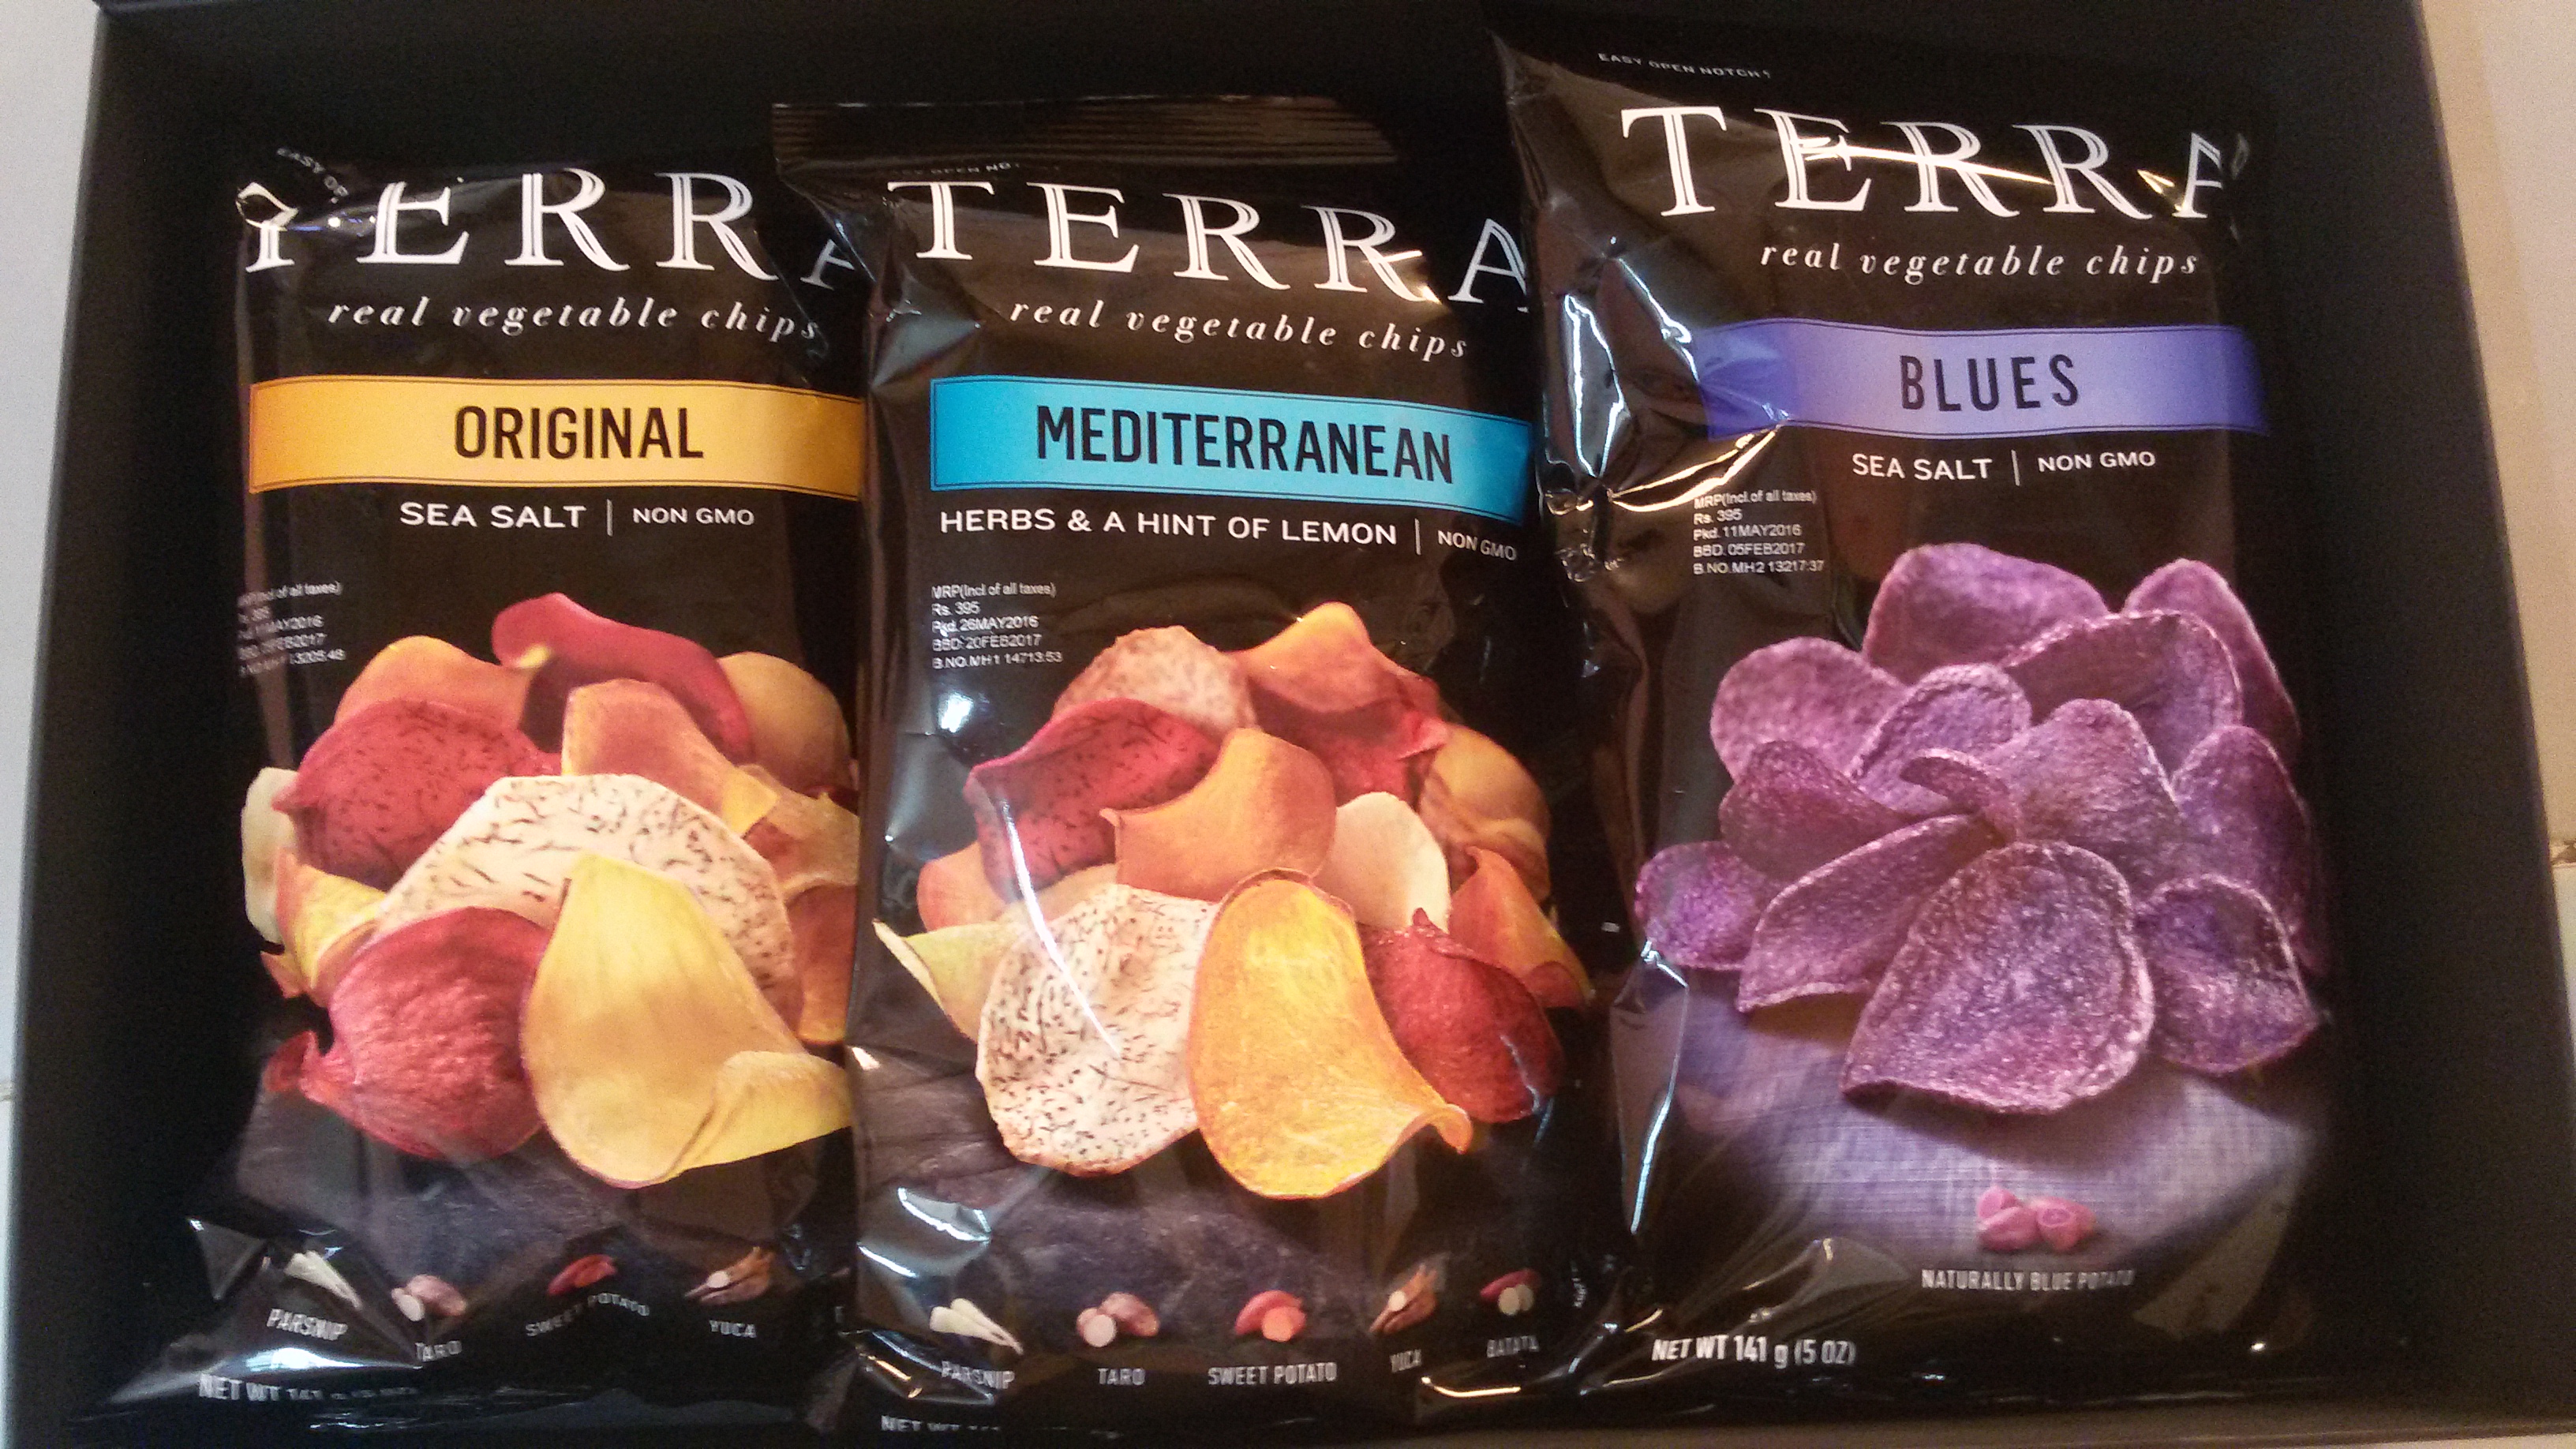 Terra Real Vegetable Chips